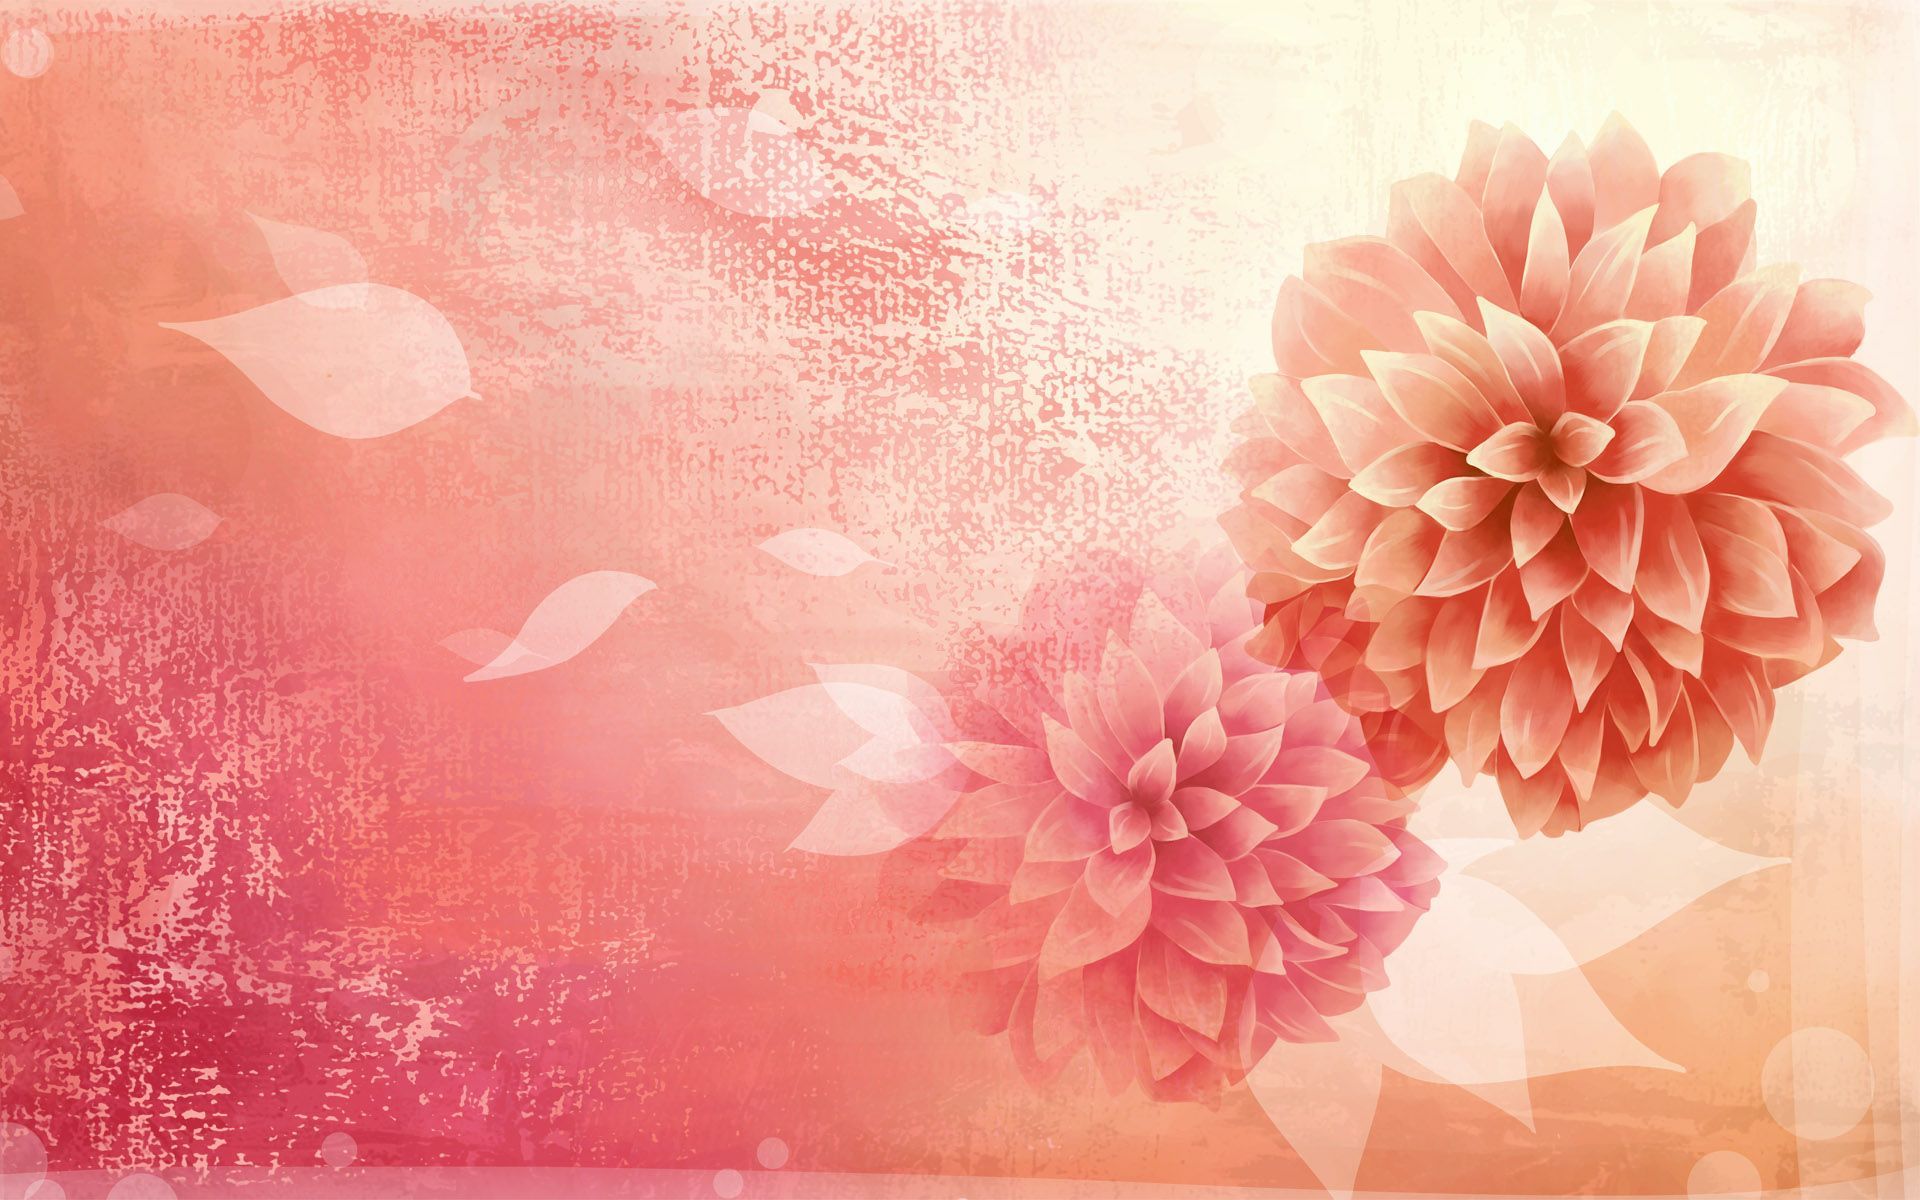 Flower Wallpaper. Flower, vector, background, wallpaper, image, wallpaper. Abstract flowers, Vector flowers, Abstract